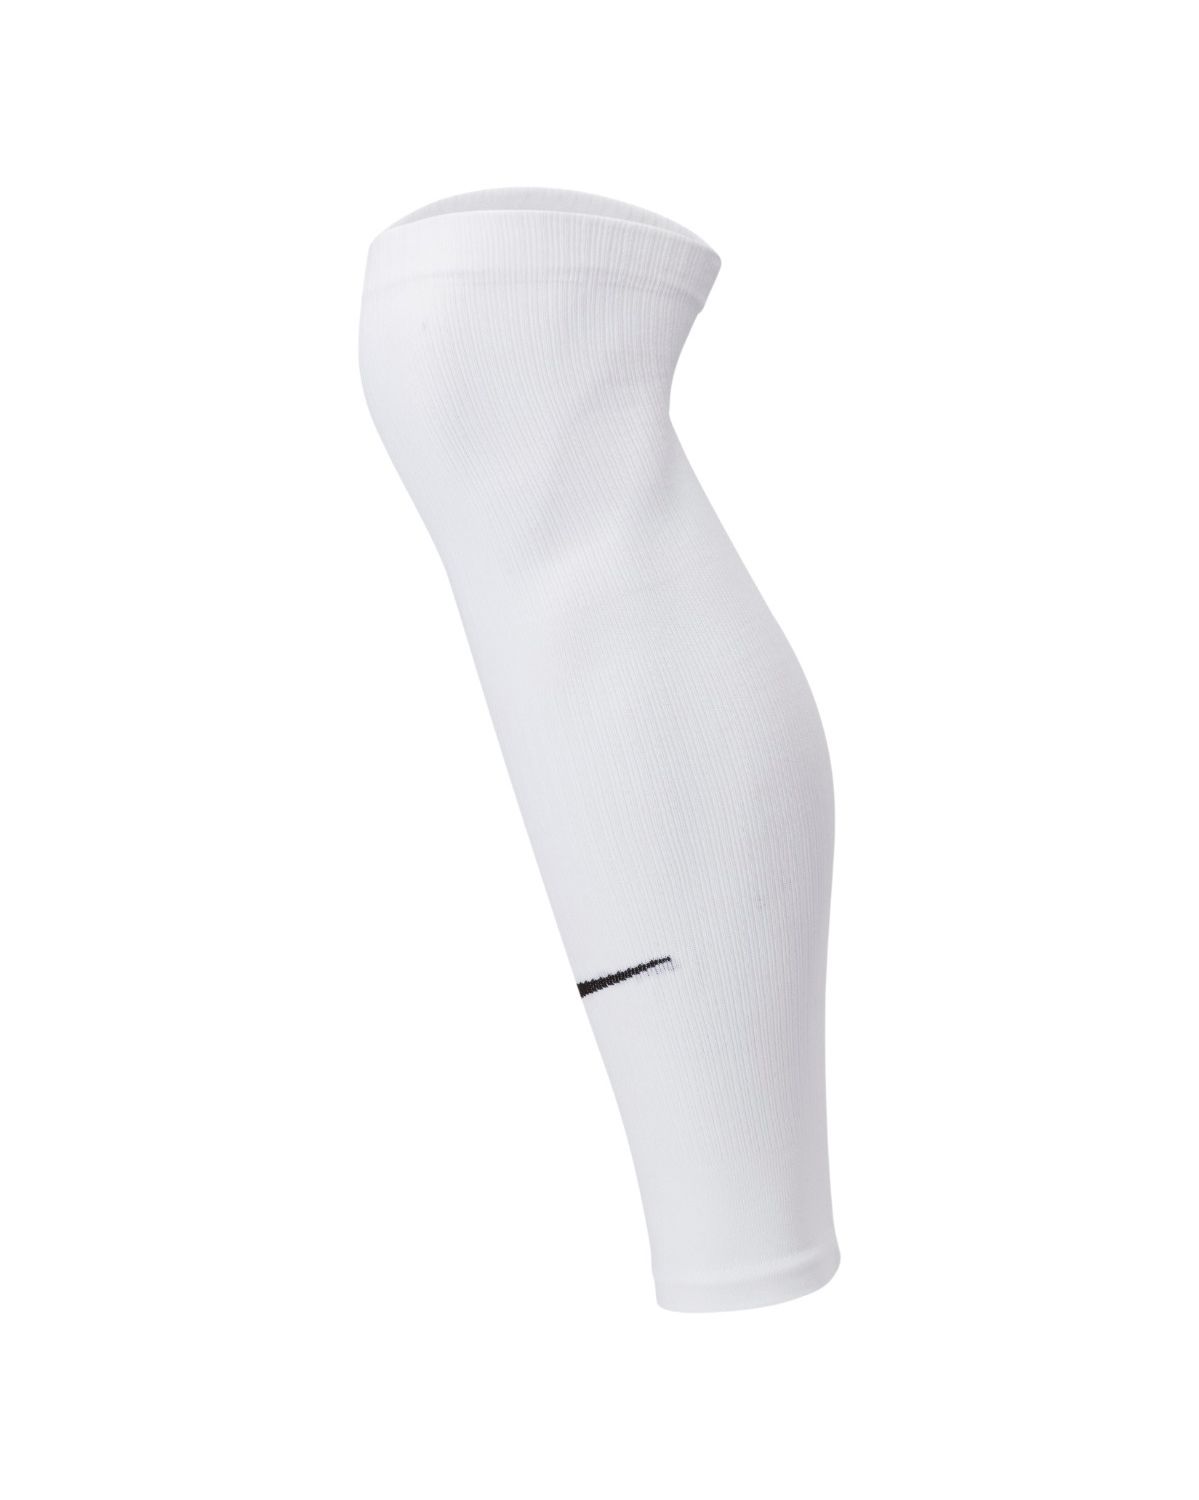 https://www.ekinsport.com/media/catalog/product/cache/2c37051f1593dcbd0cbd2eb255450bfc/c/h/chaussettes-nike-leg-sleeves-blanc-sk0033-100.jpg